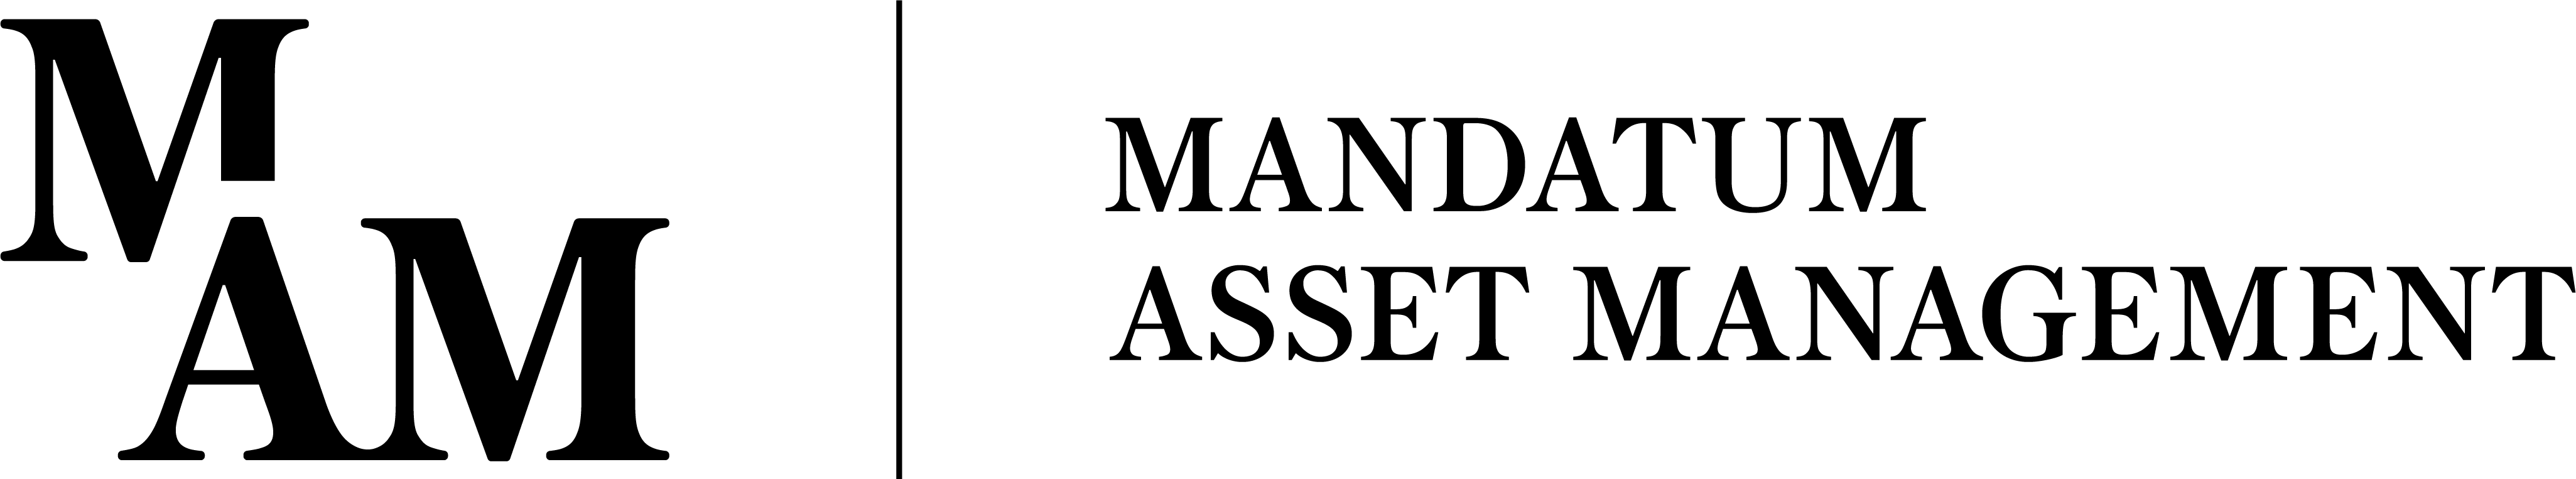 MAM-logo-2021-black.png